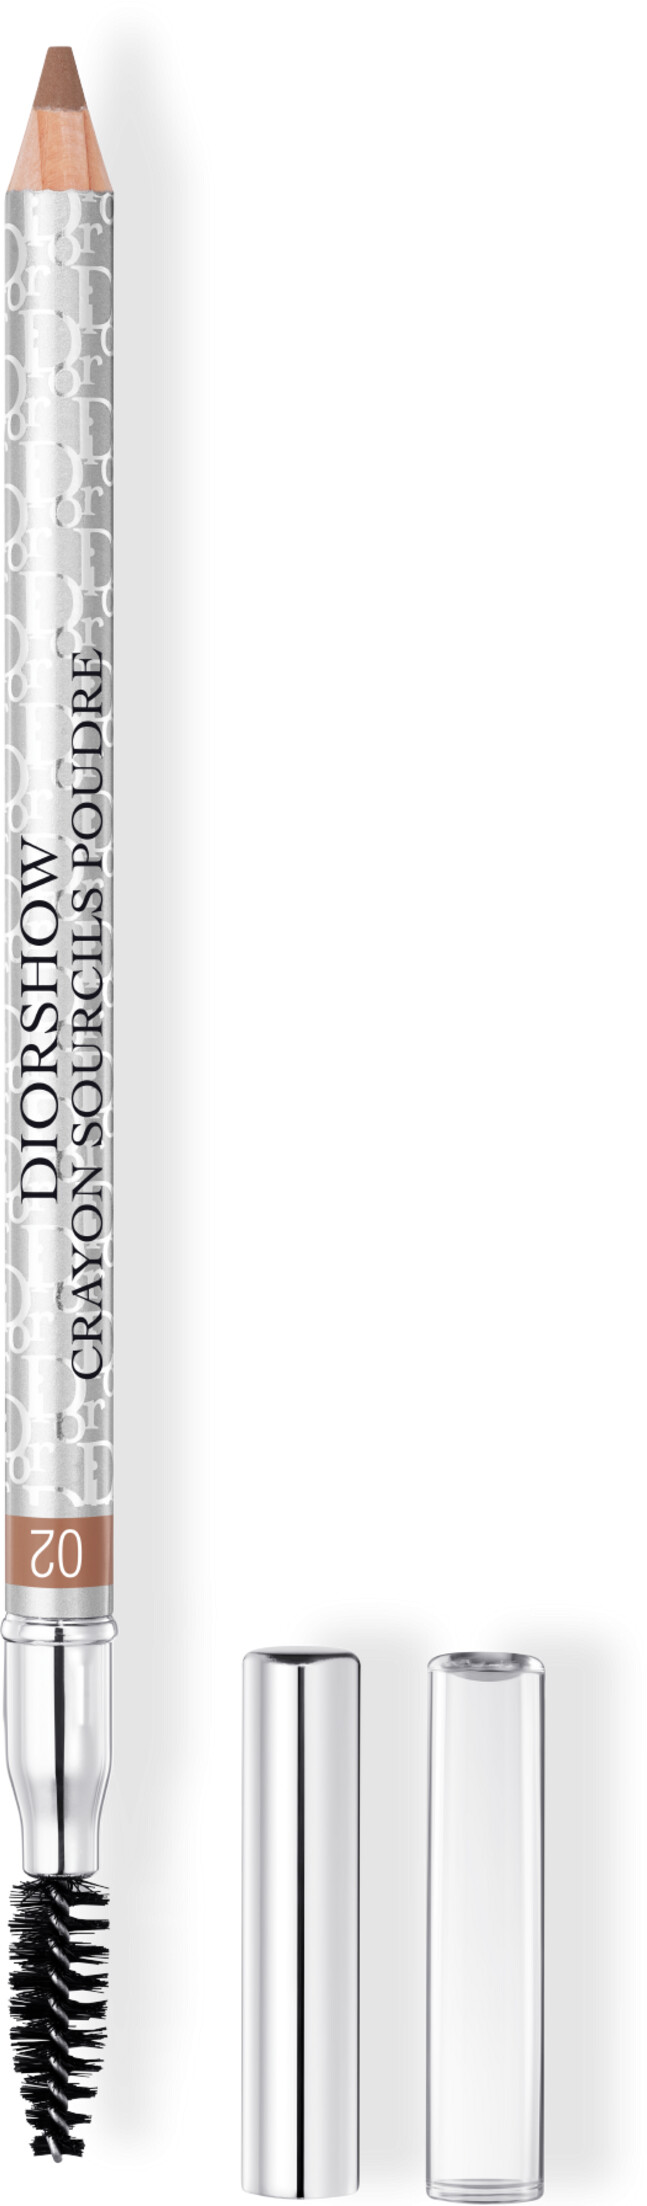 DIOR Diorshow Crayons Sourcils Poudre Eyebrow Pencil 1.19g 02 - Chestnut